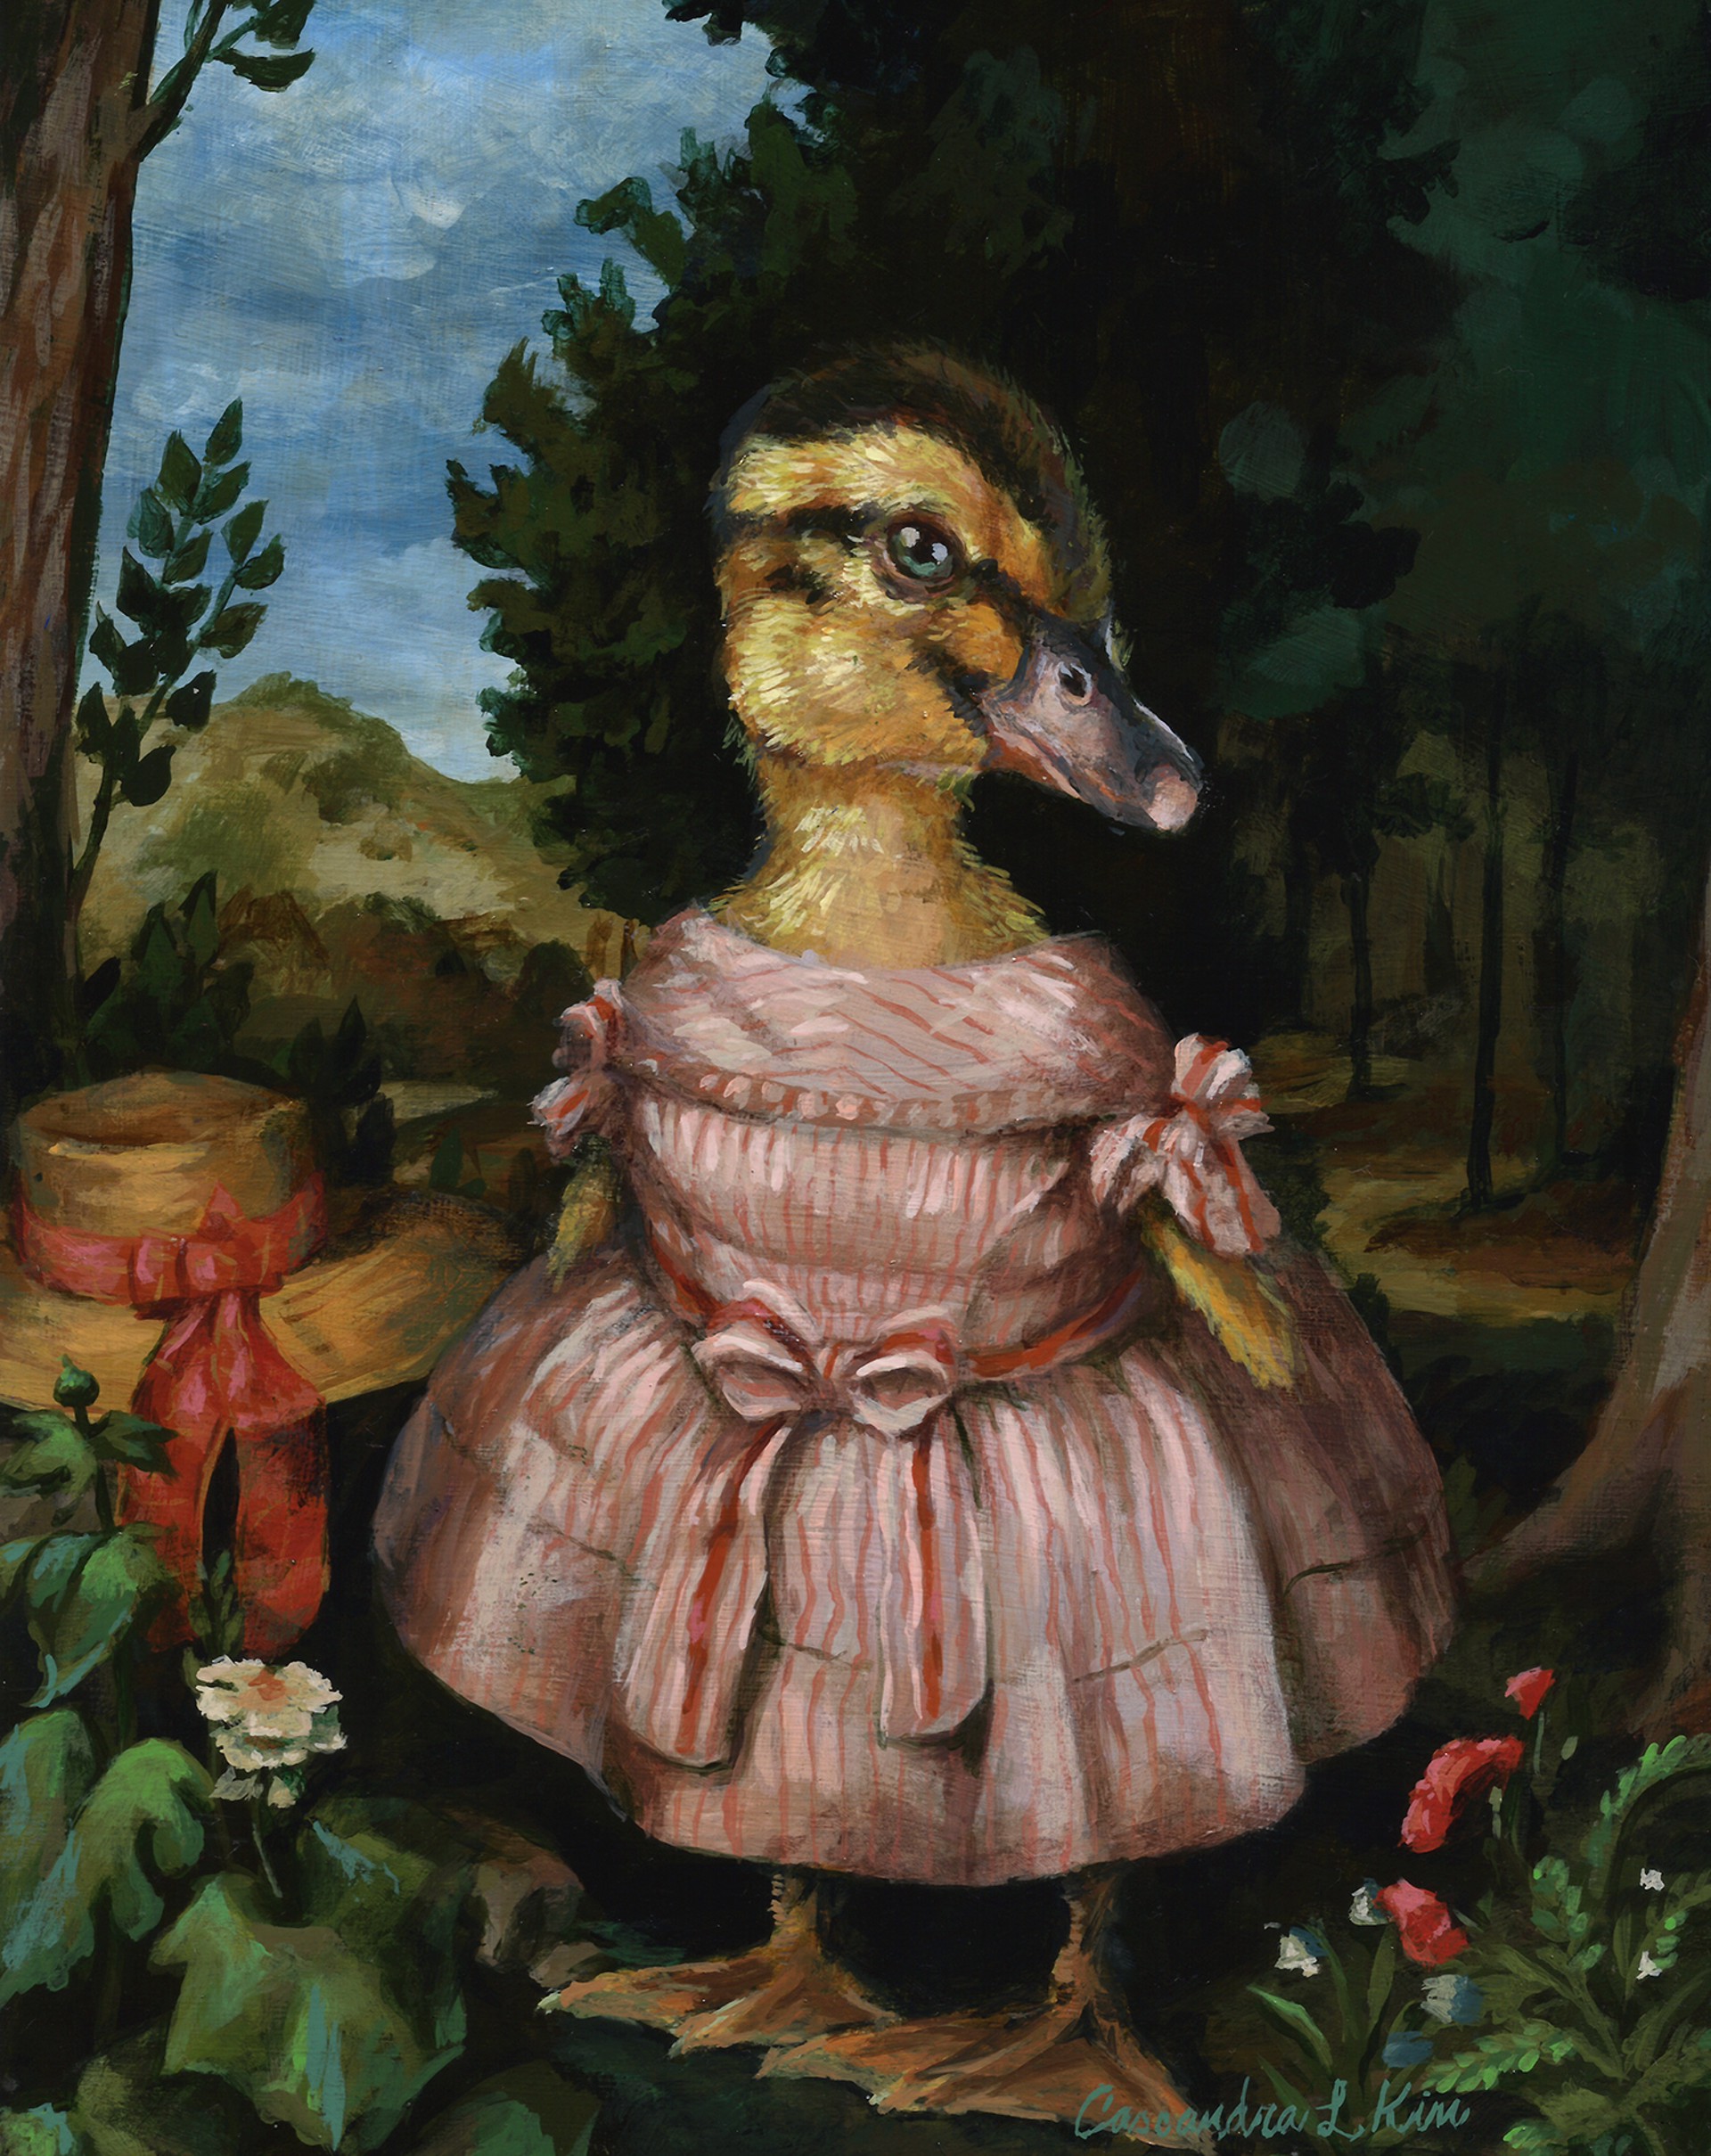 Portrait of a Duckling in a Dress by Cassandra Kim